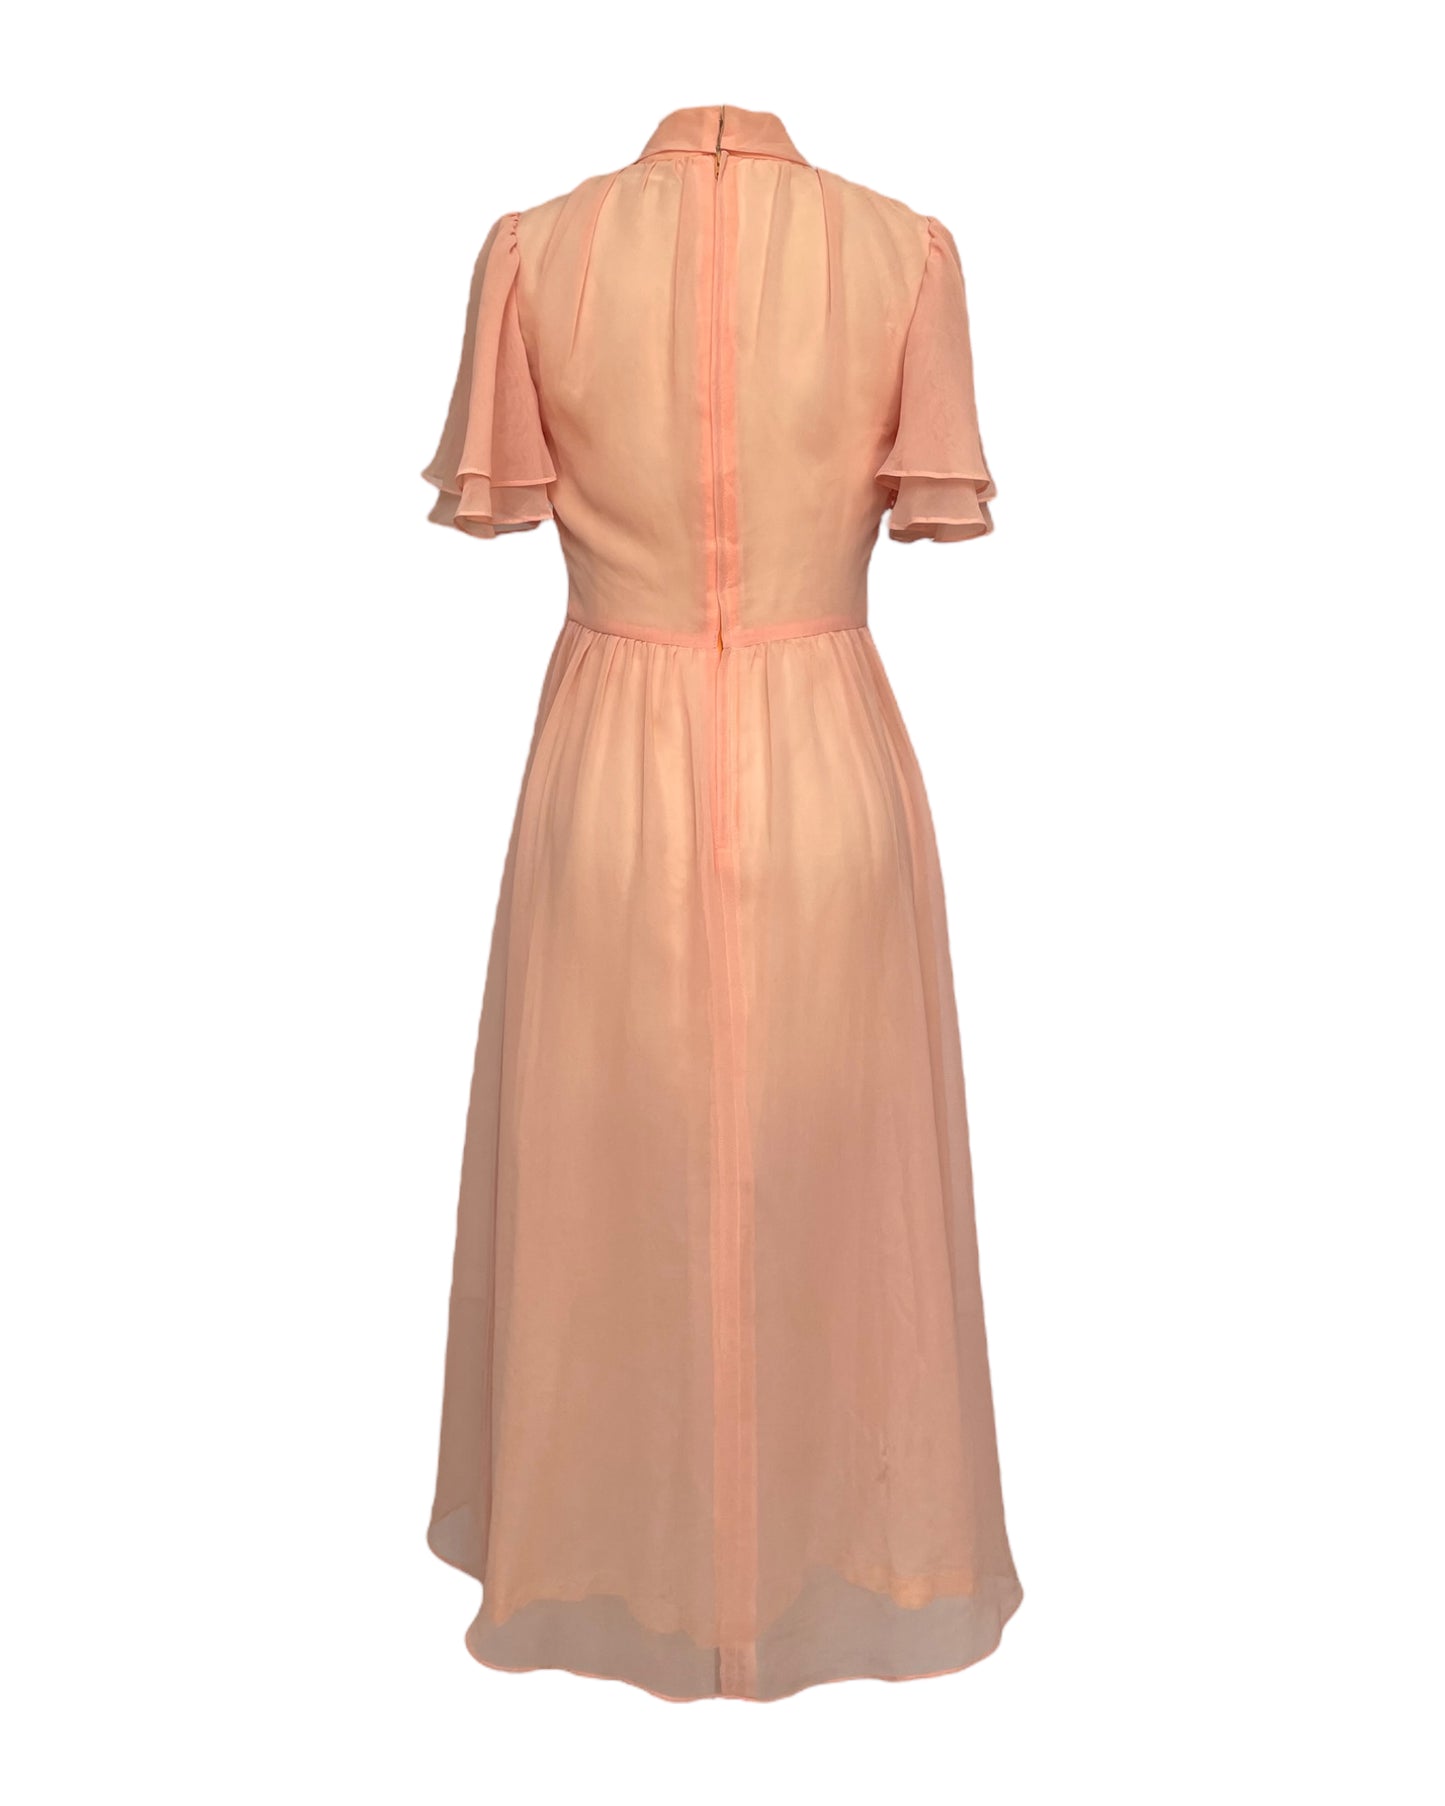 Vintage Princess Peach Dress*